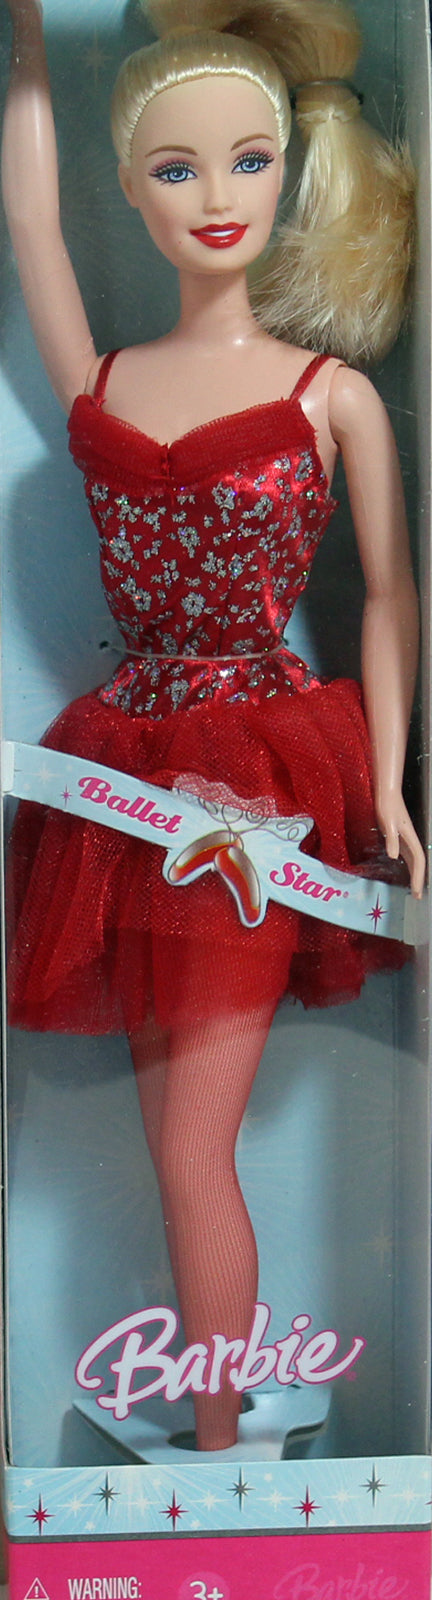 2006 Ballet Star Barbie (39700)